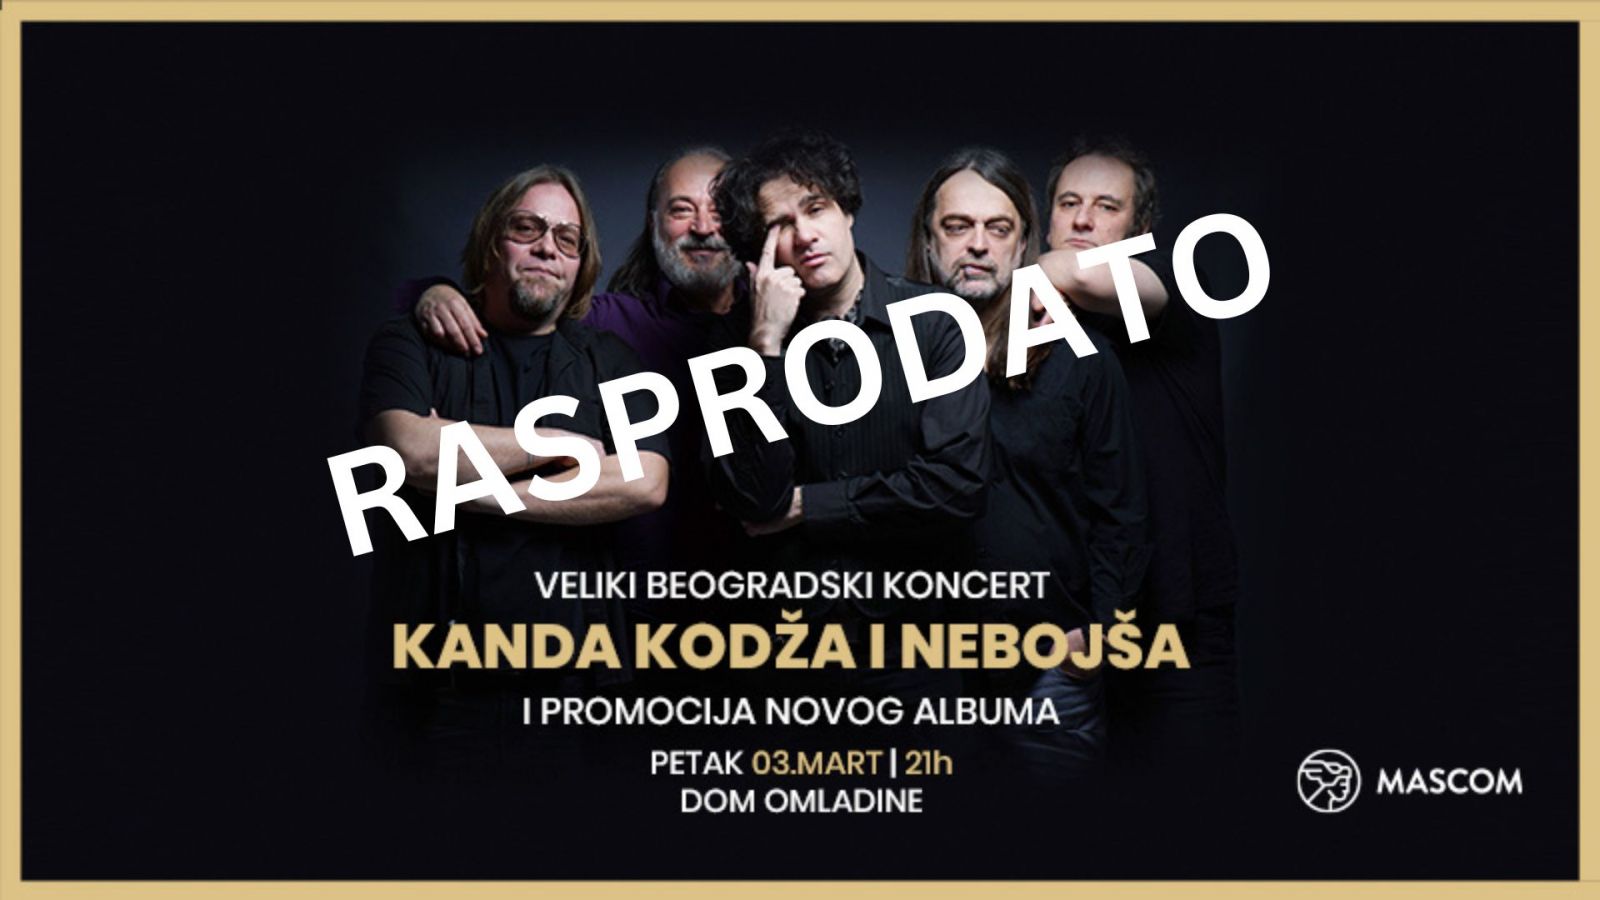 Veliki beogradski koncert grupe Kanda, Kodža i Nebojša JE RASPRODAT